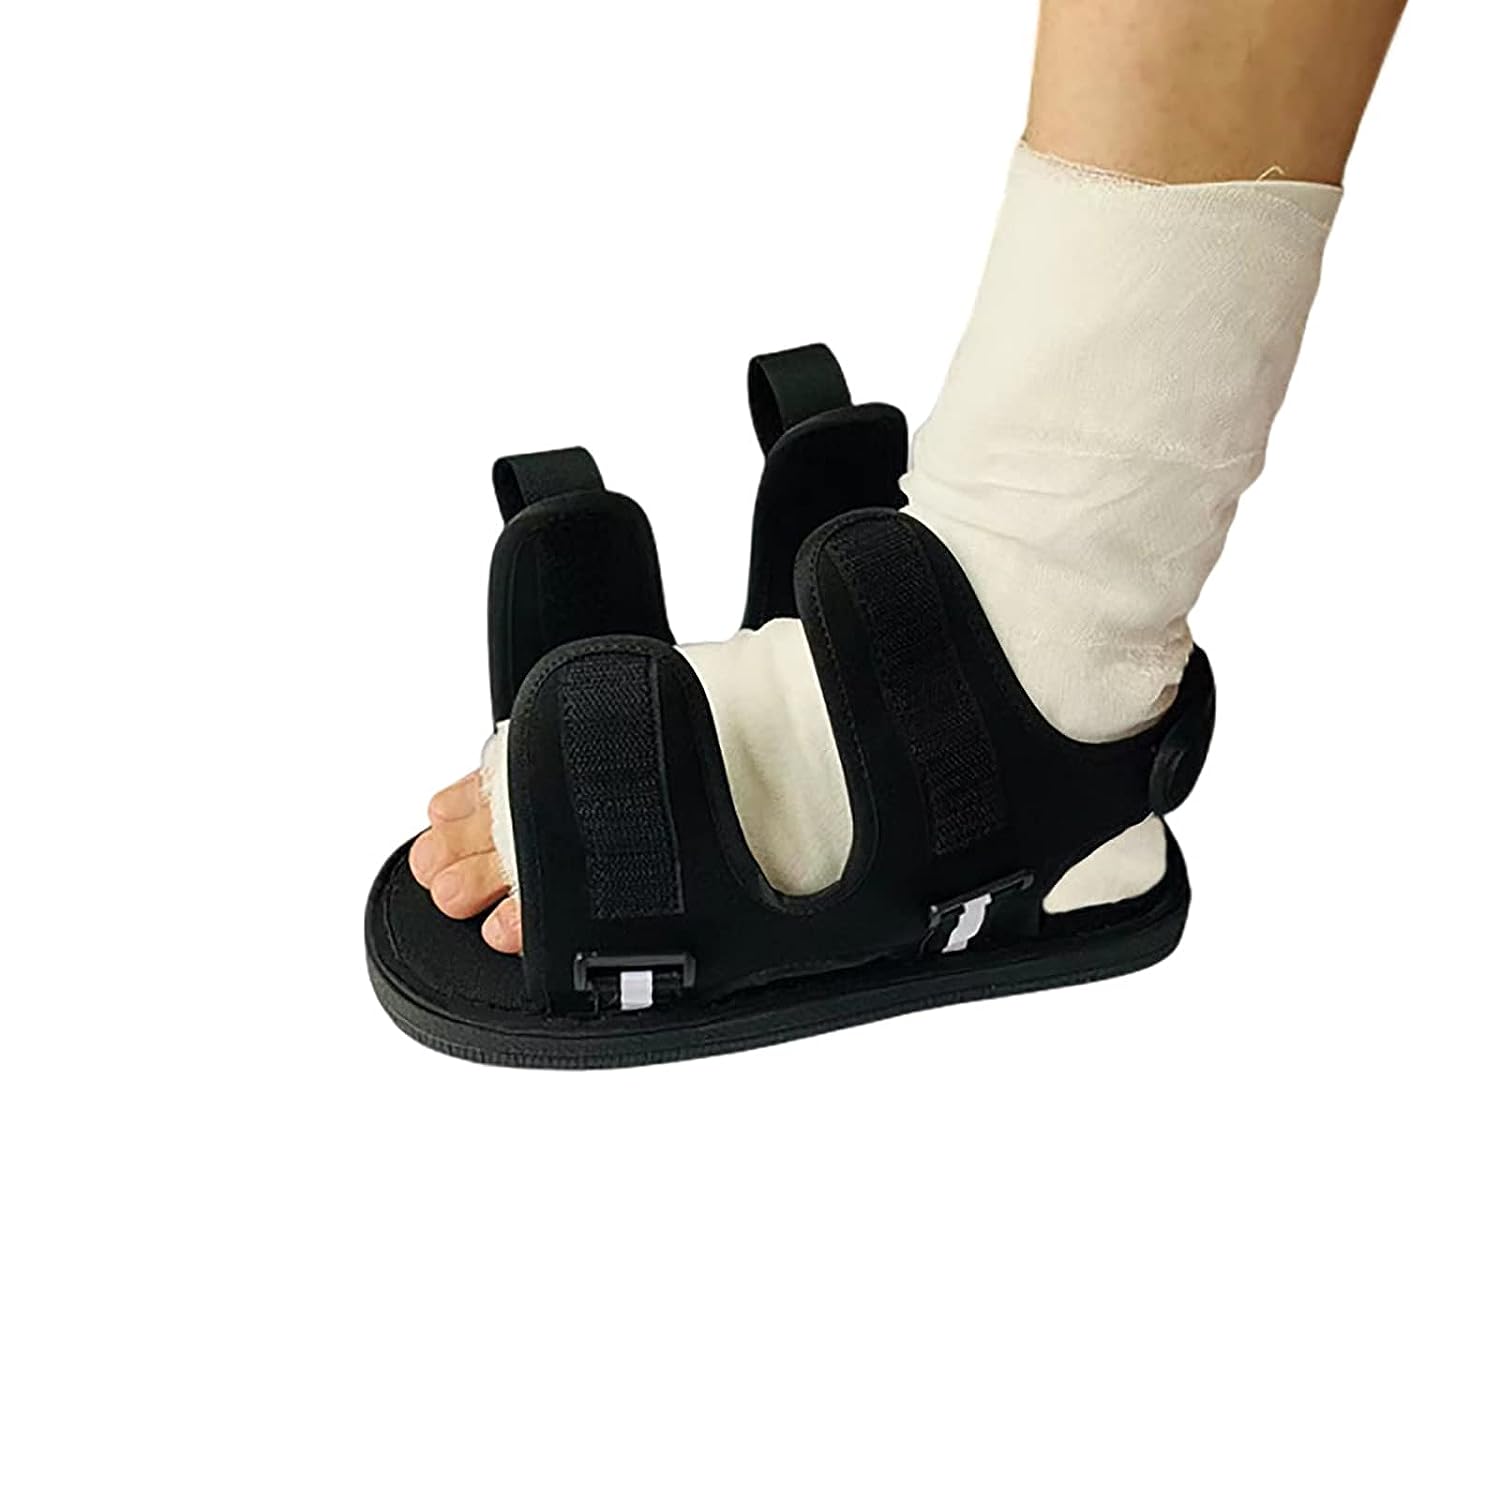 1 Piece Post Op Shoe Walking Boot Rehabilitation [...]